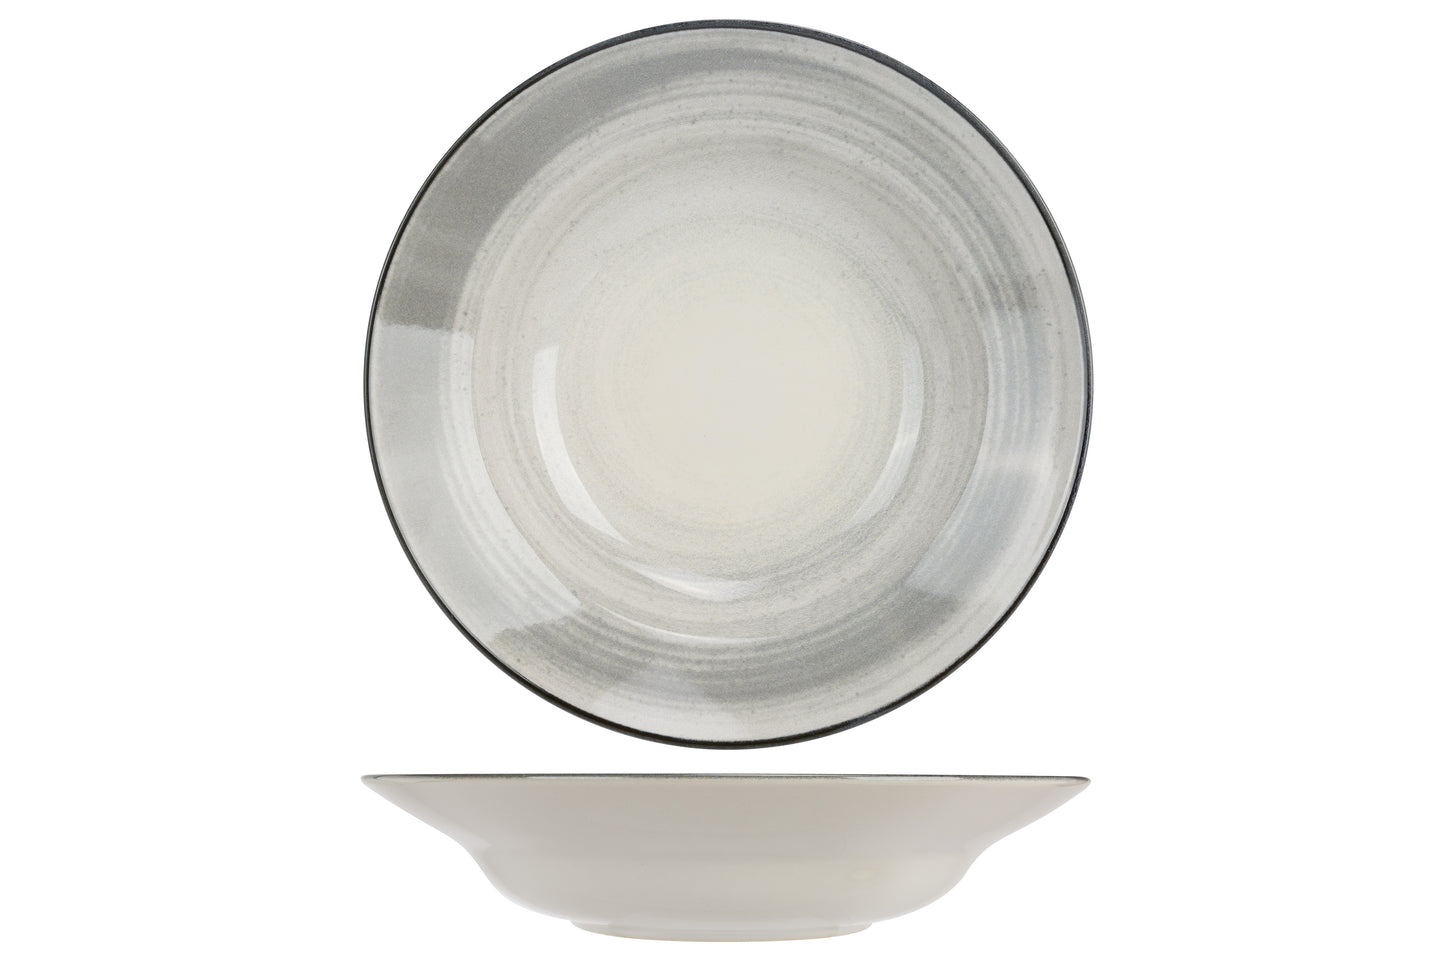 Baltic Grey Pasta Plate, 29 (11.4") dia., round, stoneware